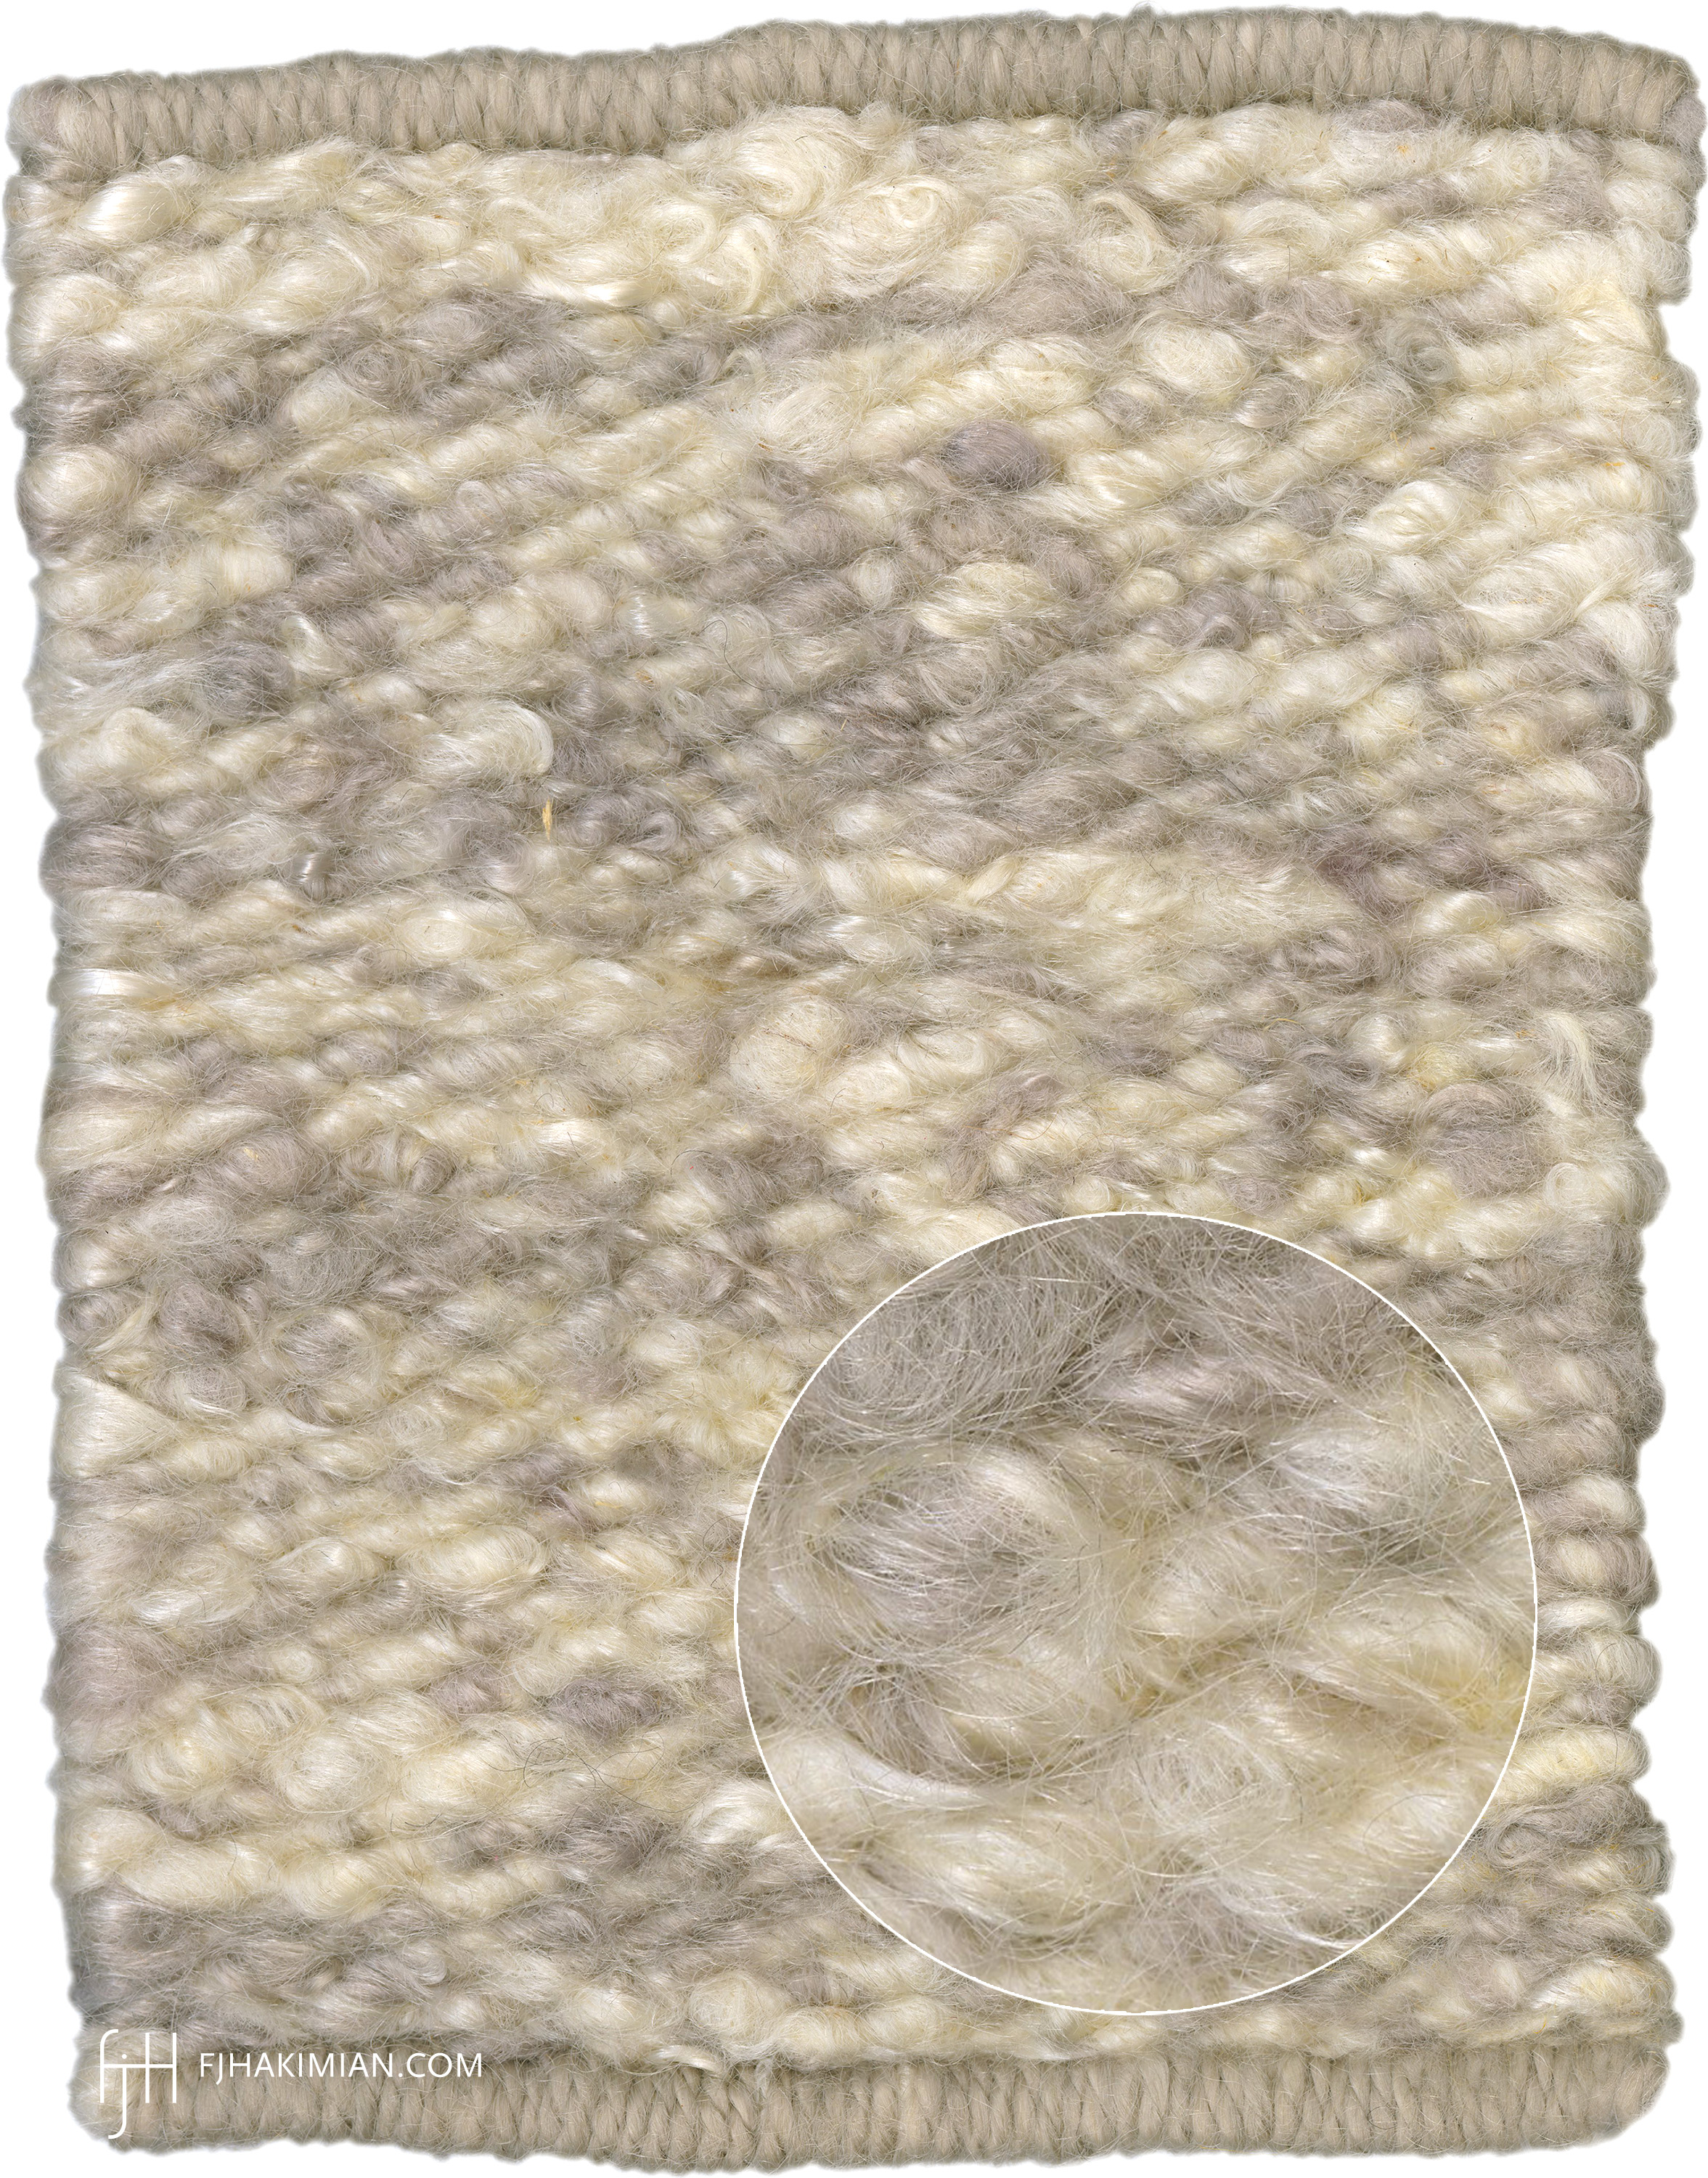 77805 | KL Marbled Dove Gray Design | Custom Mohair Carpet | FJ Hakimian | Carpet Gallery in NYC